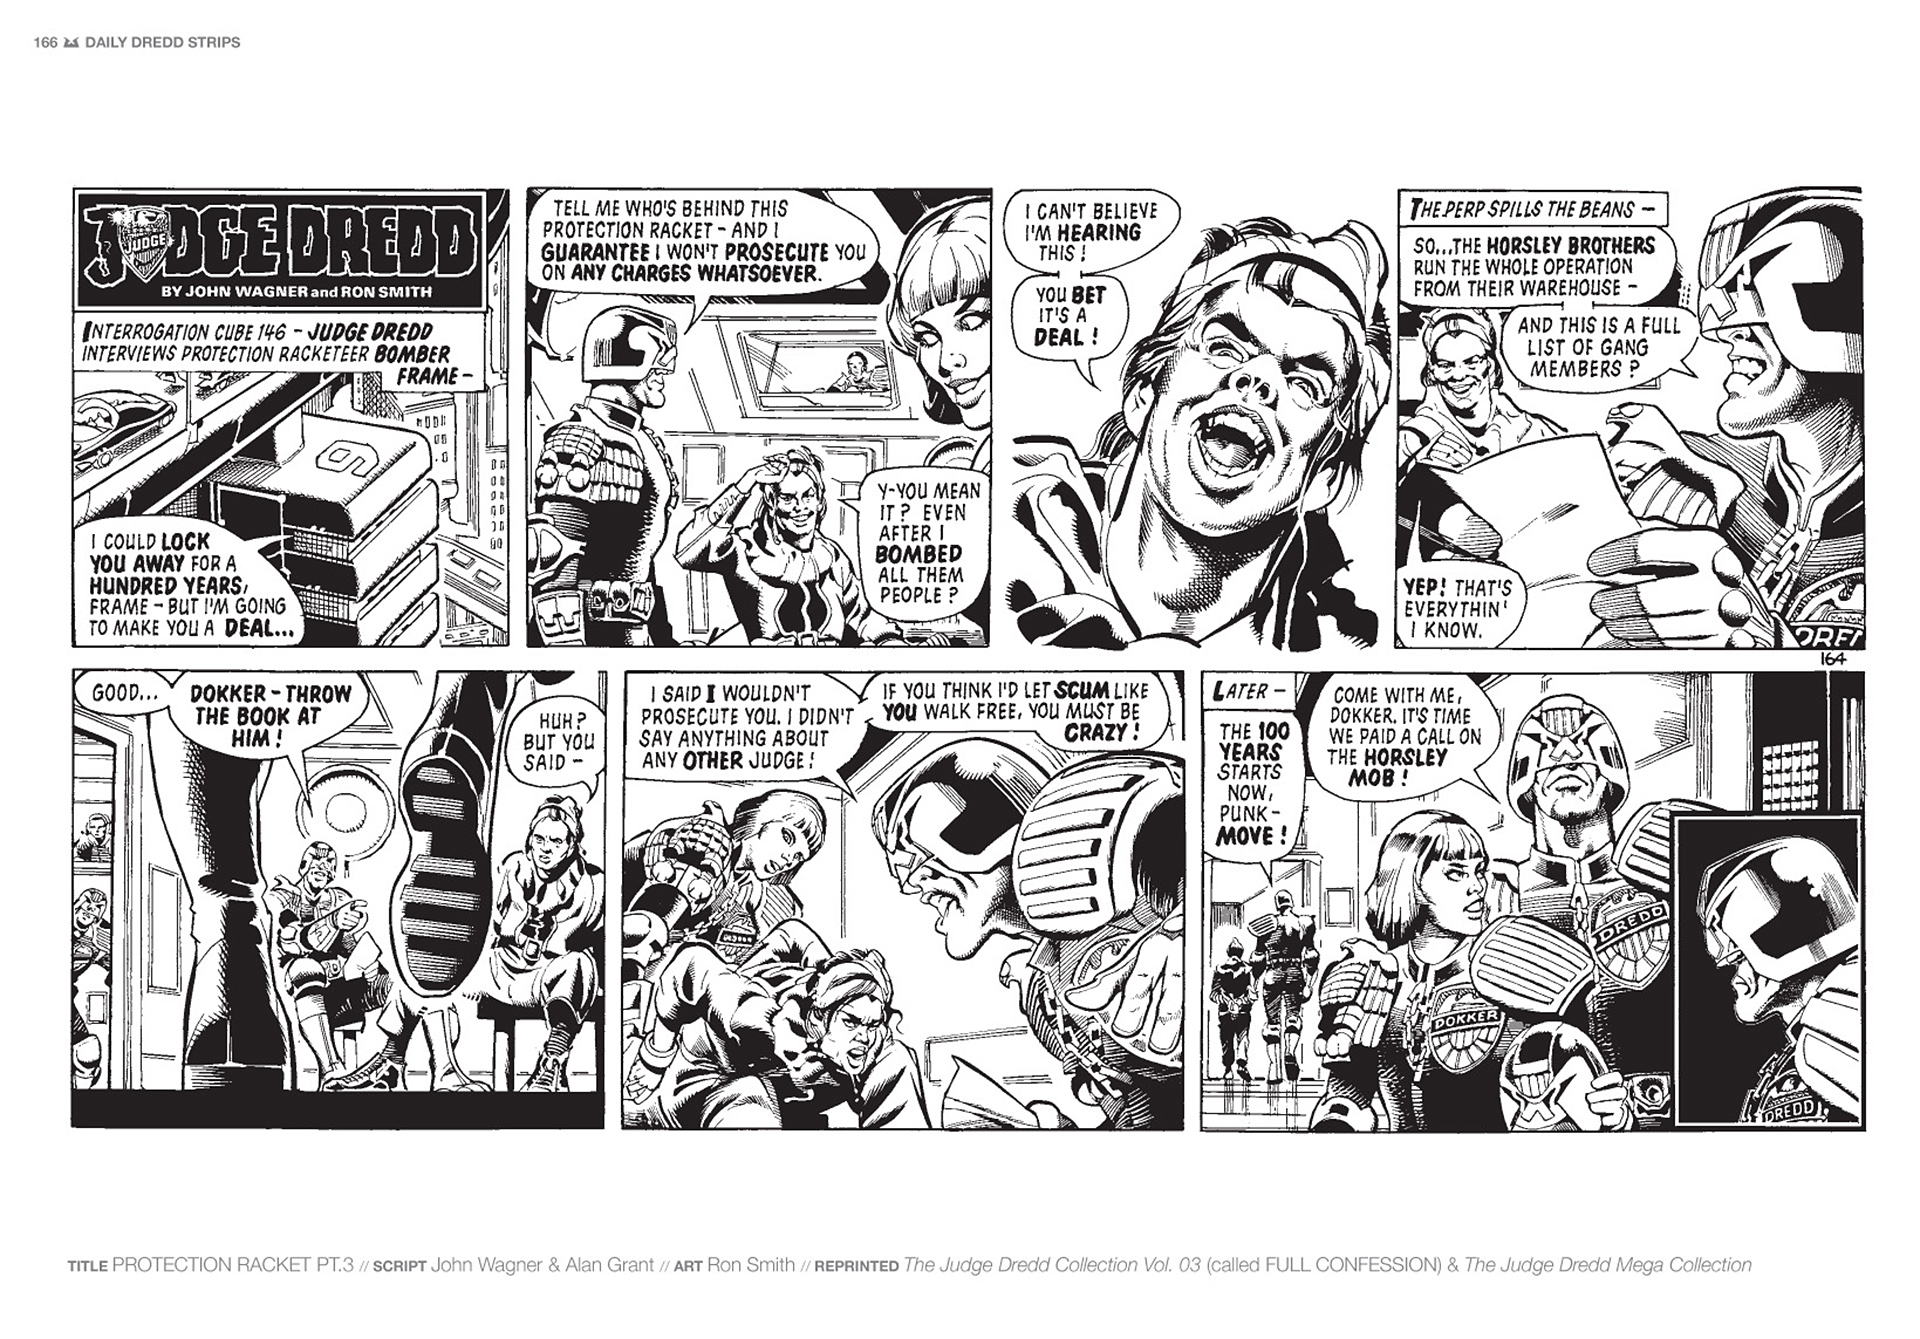 Read online Judge Dredd: The Daily Dredds comic -  Issue # TPB 1 - 169